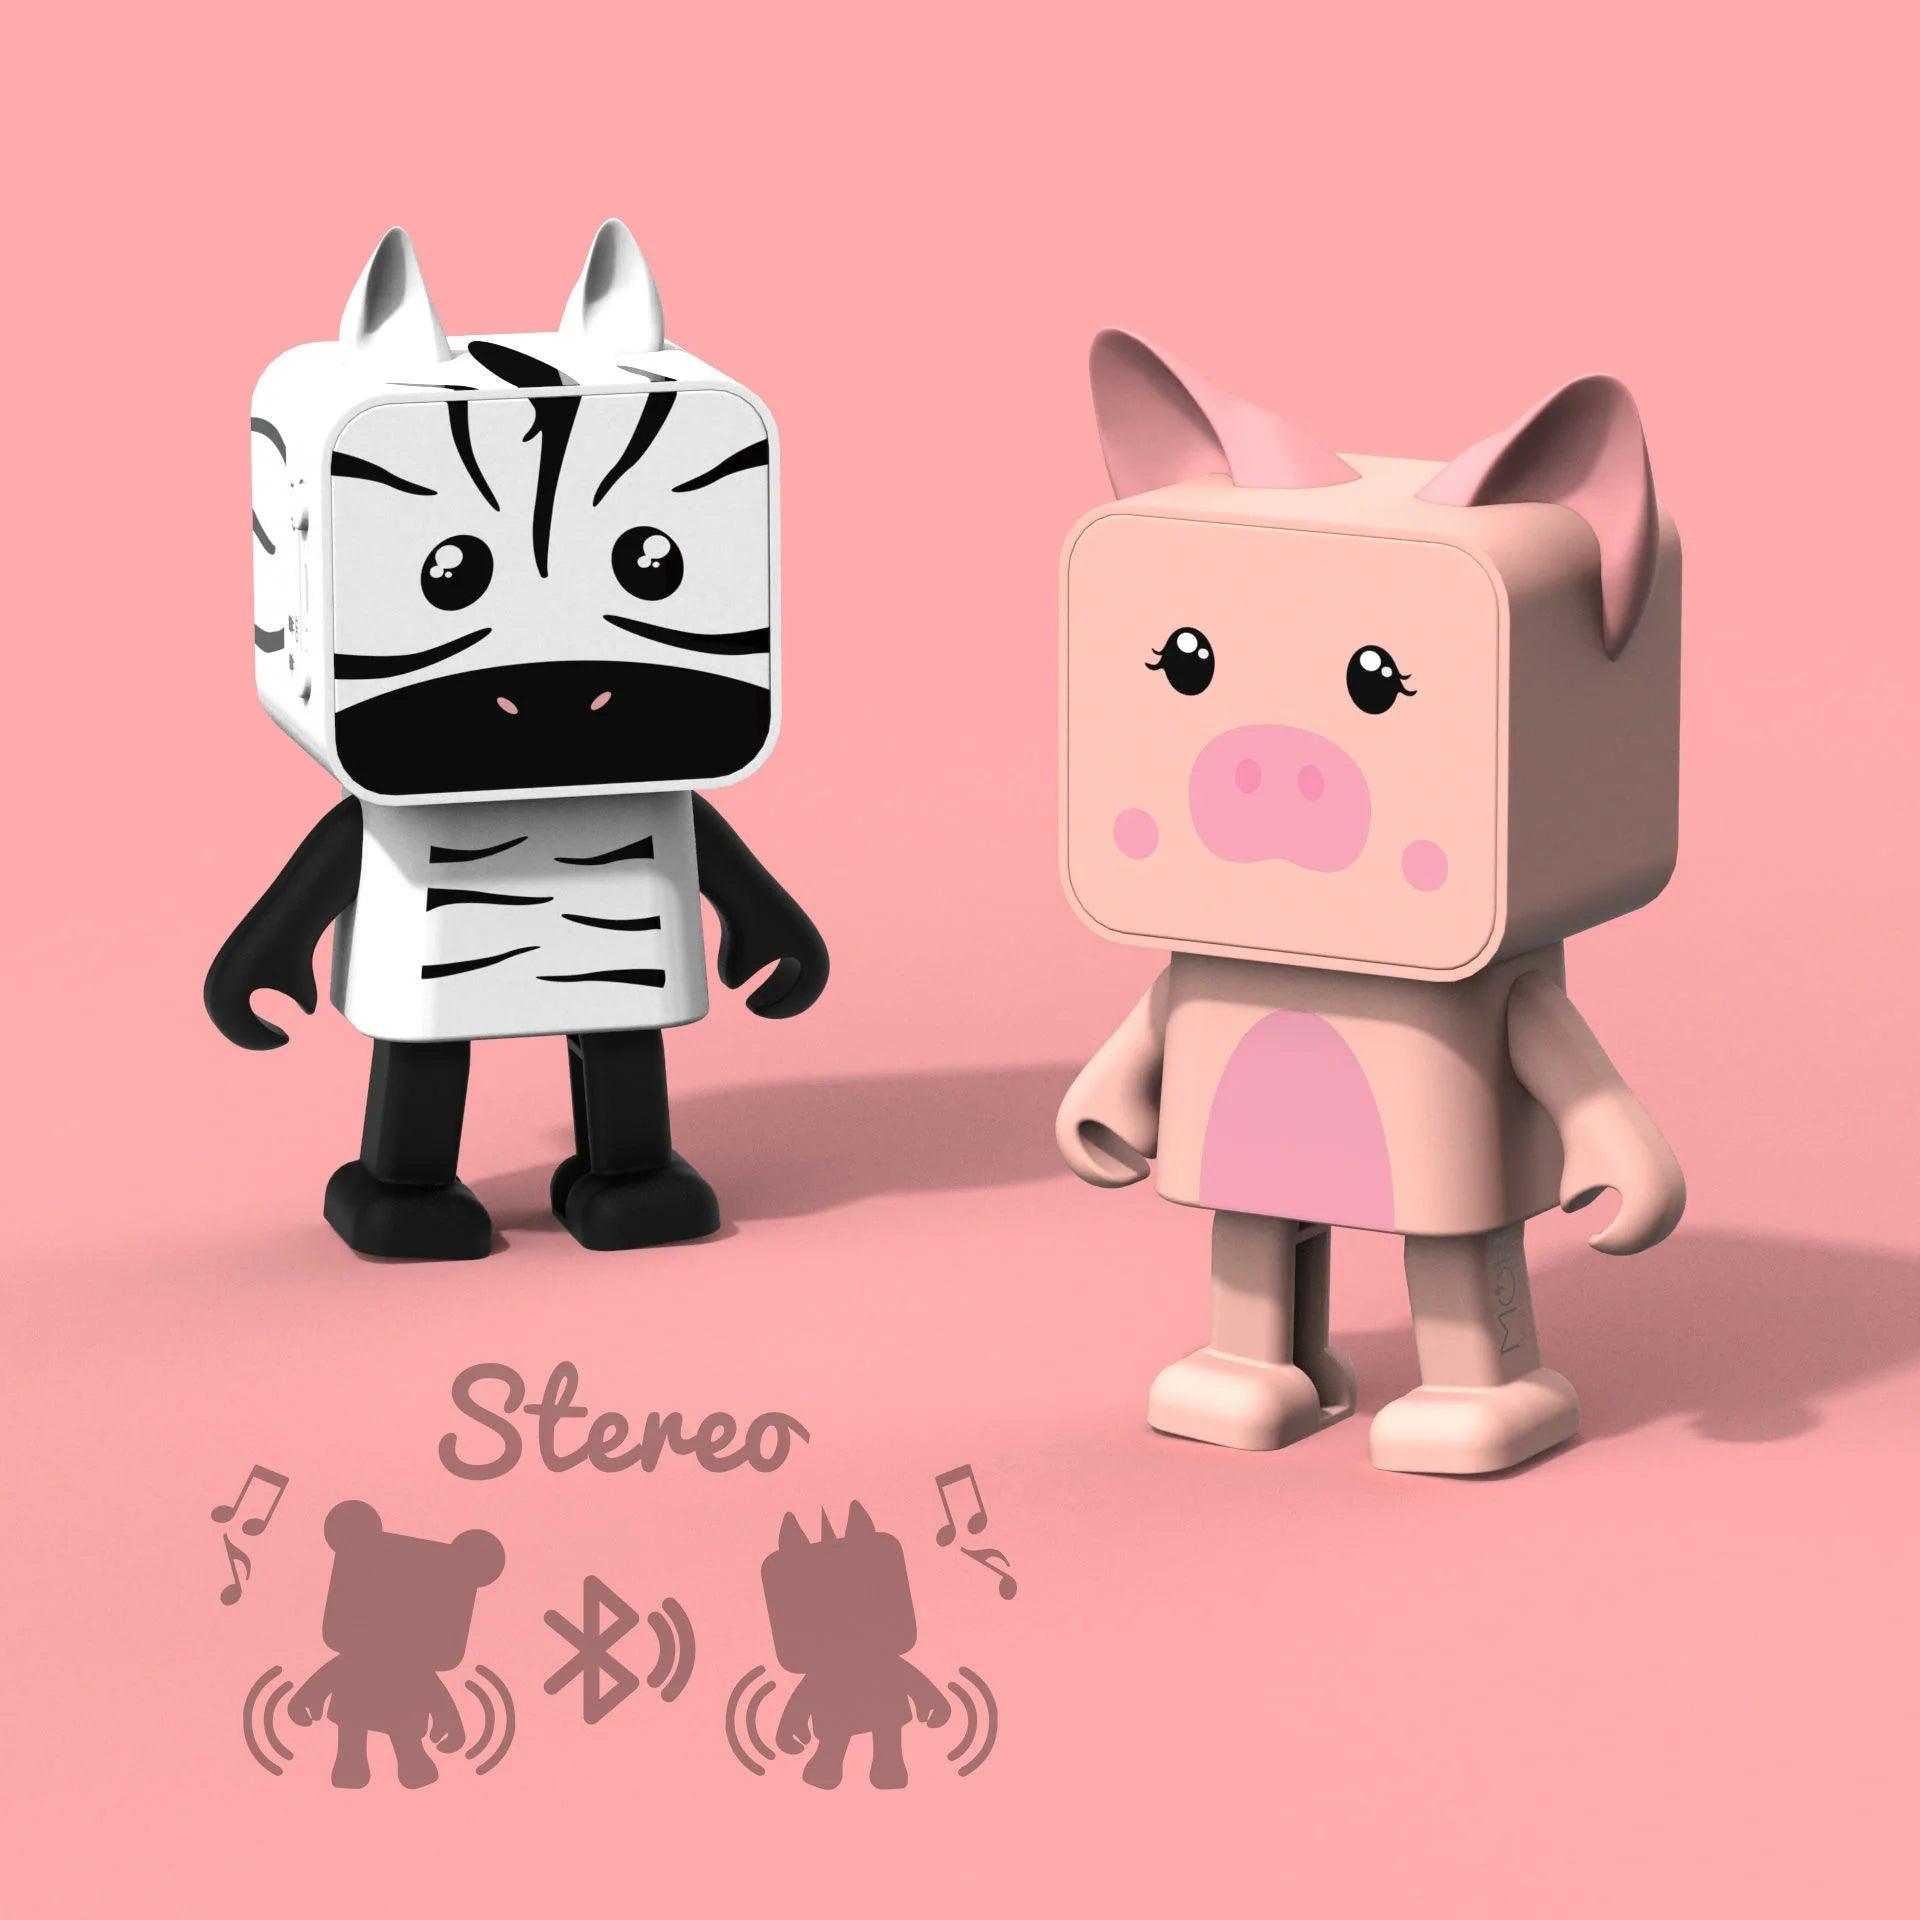 MOB - Dancing Animal speaker - Schwein - Makimo - Smart Kids